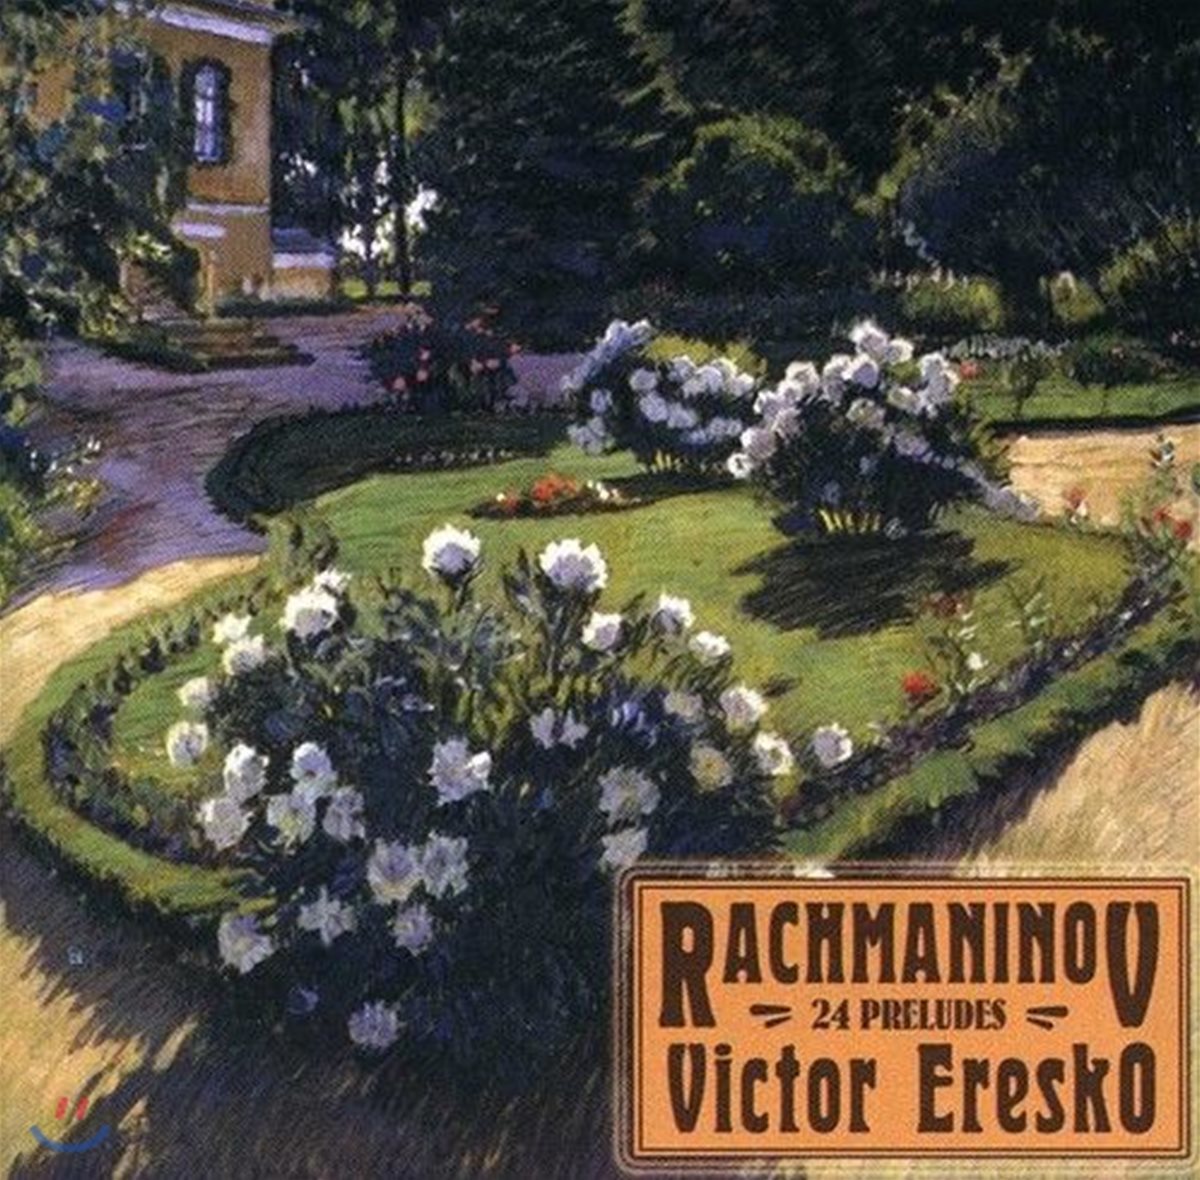 Victor Eresko 라흐마니노프: 전주곡 [프렐류드] (Rachmaninov: 24 Preludes)